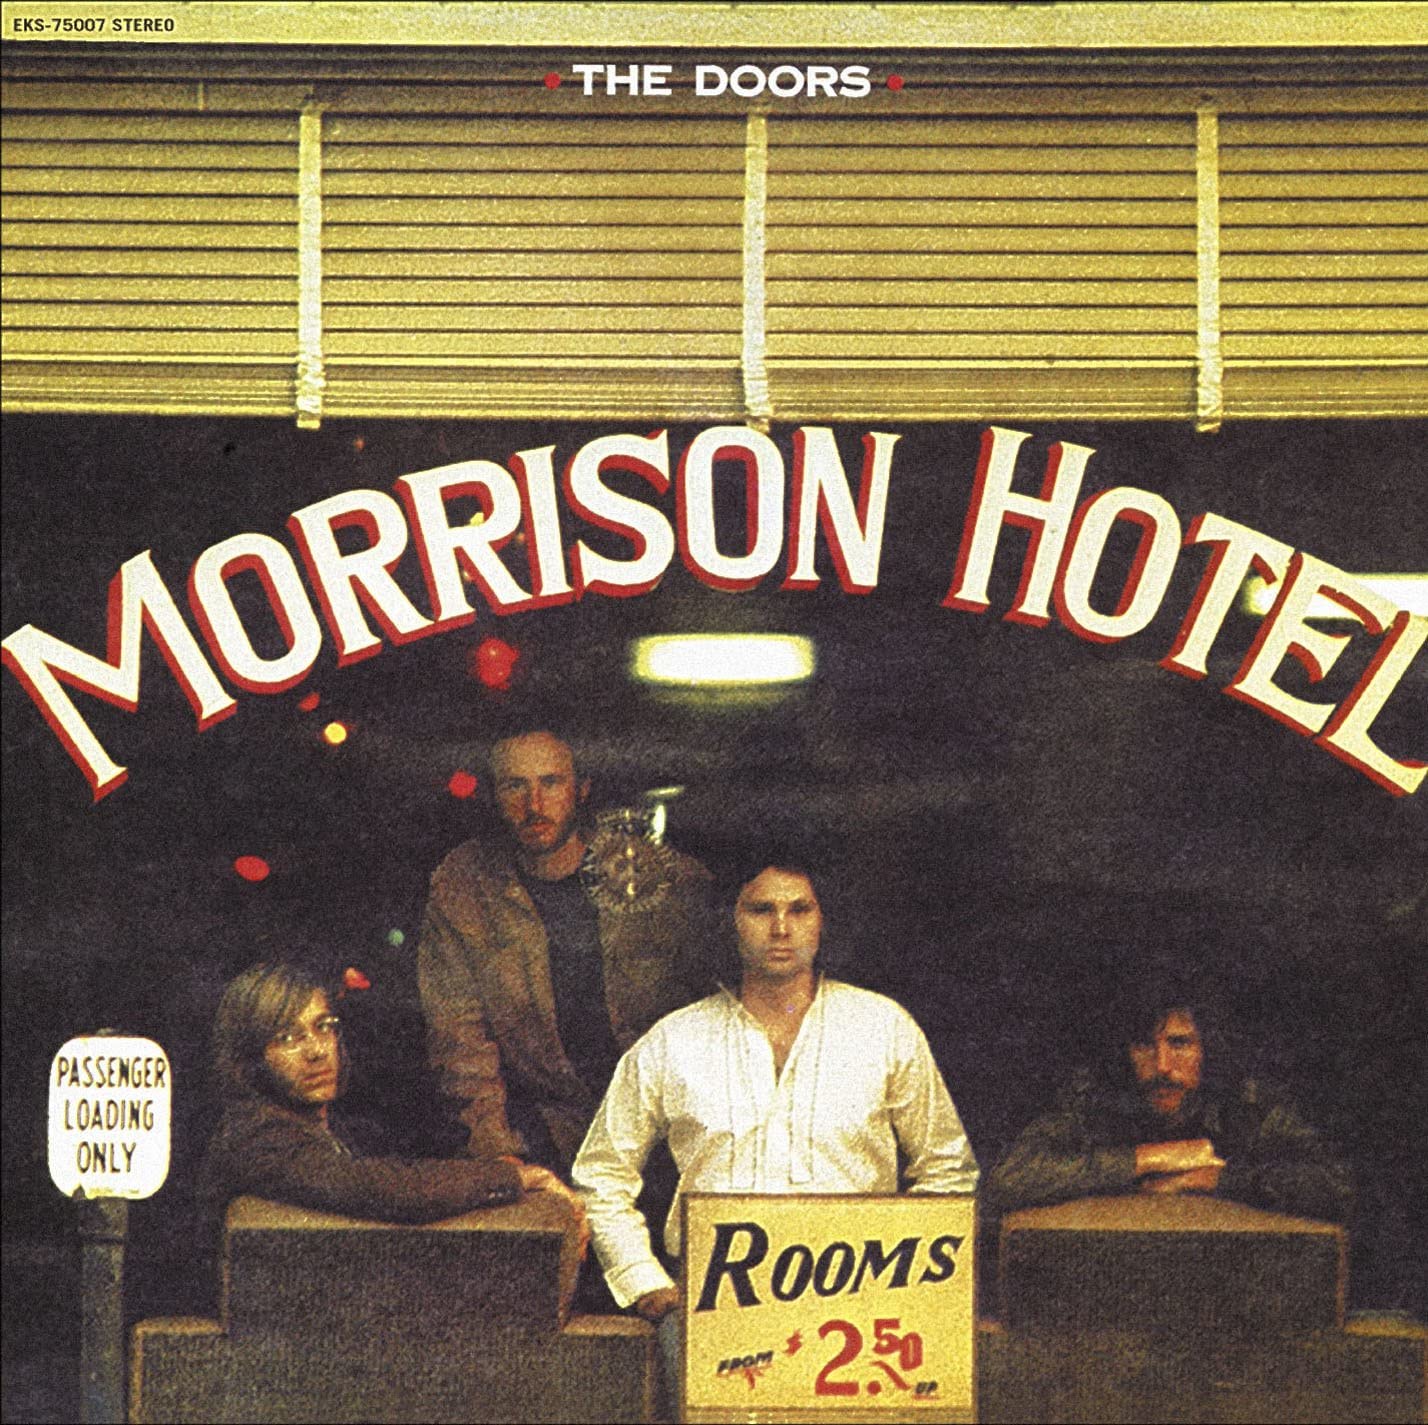 Morrison Hotel LP | Vinile The Doors